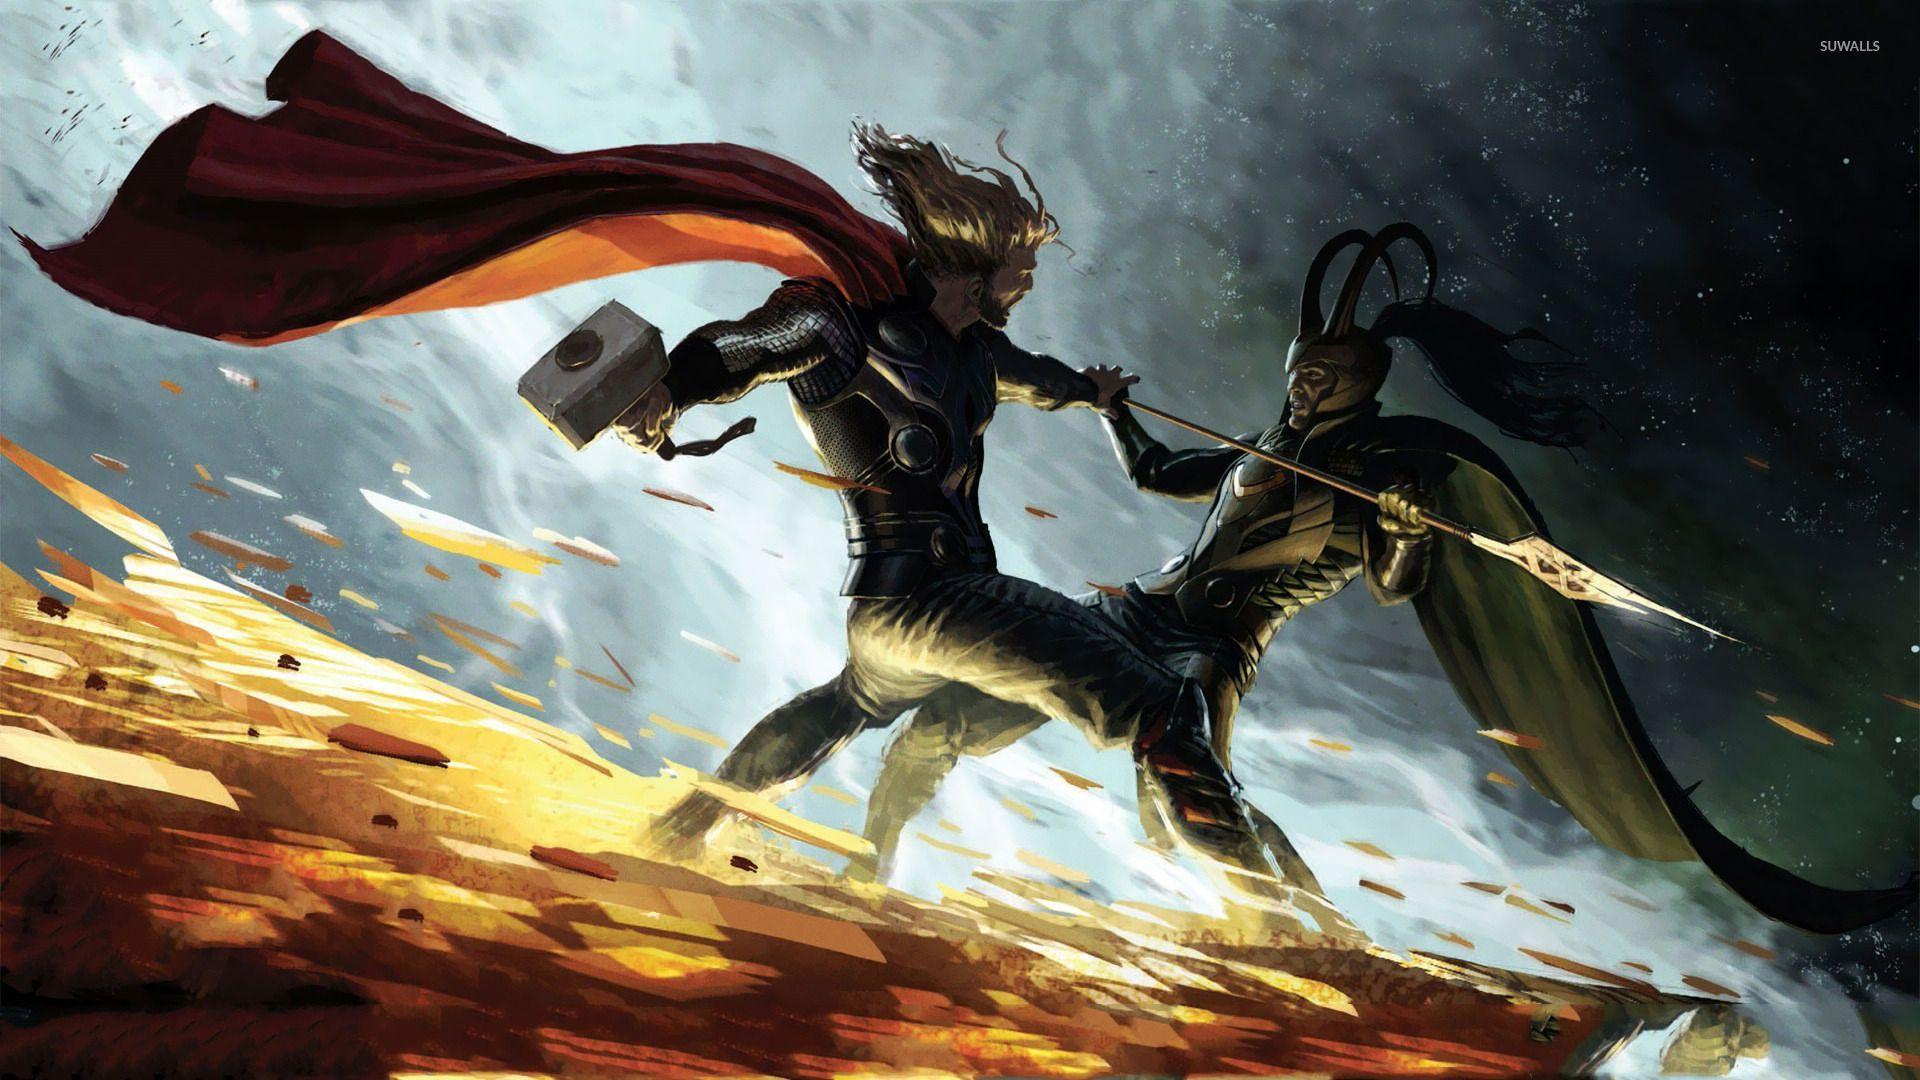 Thor vs Loki wallpaper wallpaper